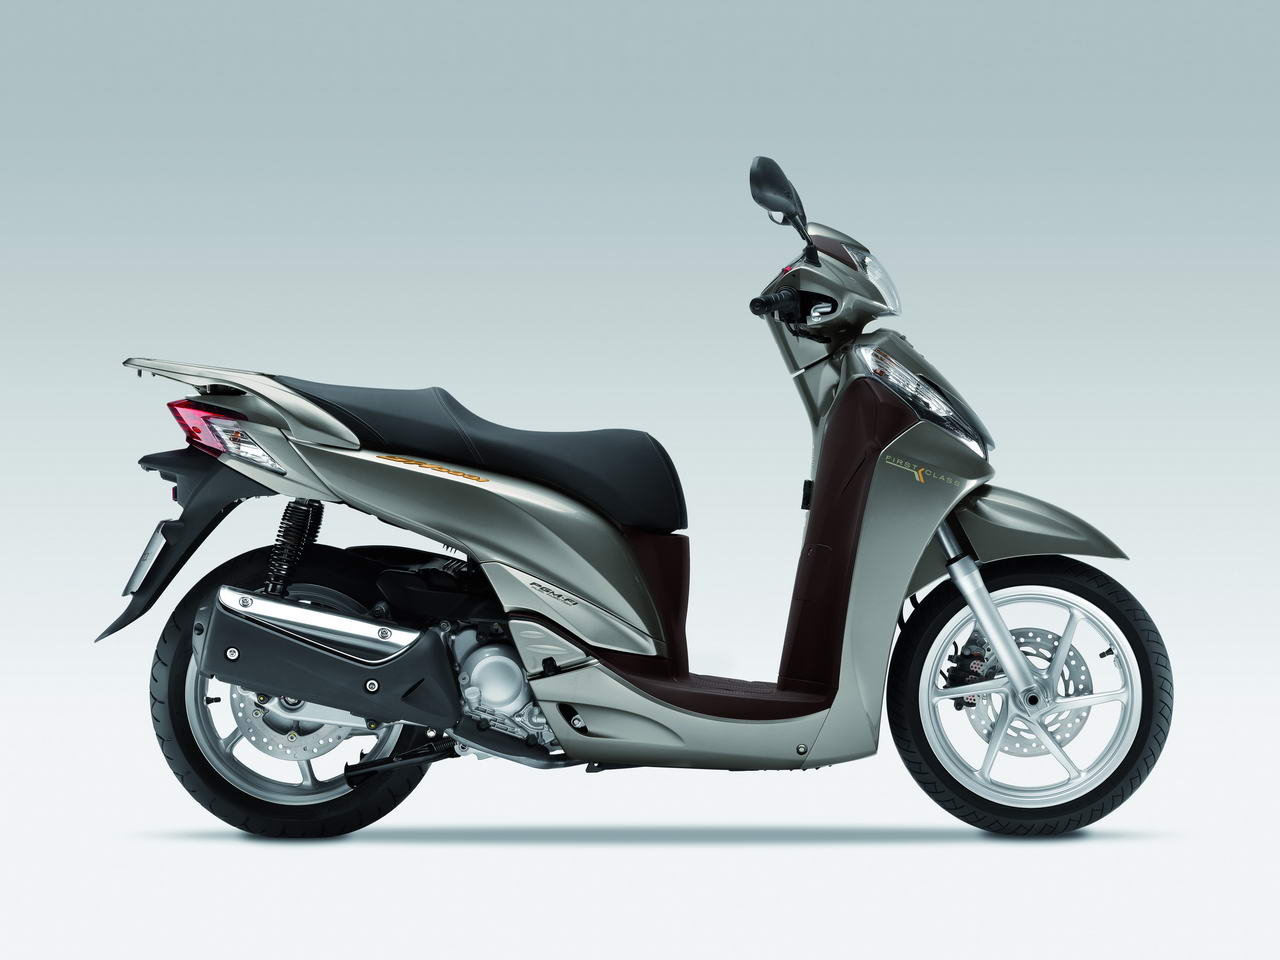 Listino Honda SH 300i Scooter 150-300 - image 14722_honda-sh300i on https://moto.motori.net